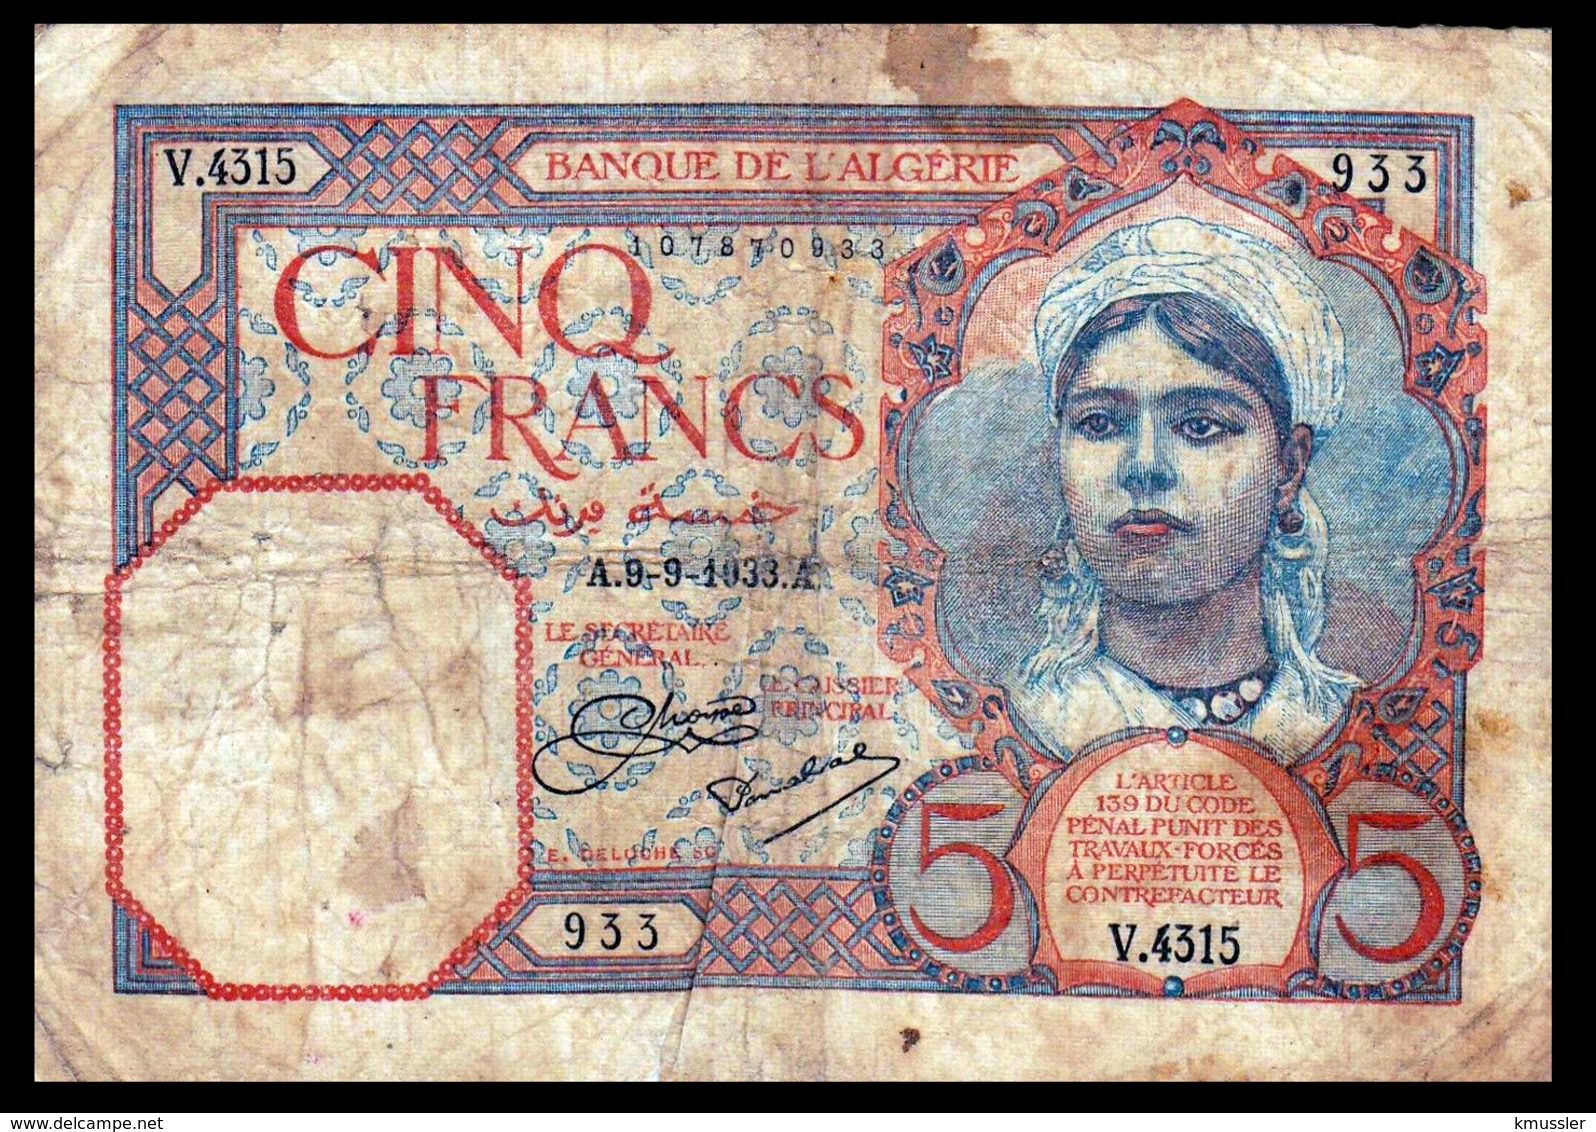 # # # Banknote Algerien (Algeria) 5 Francs 1933  # # # - Algerien